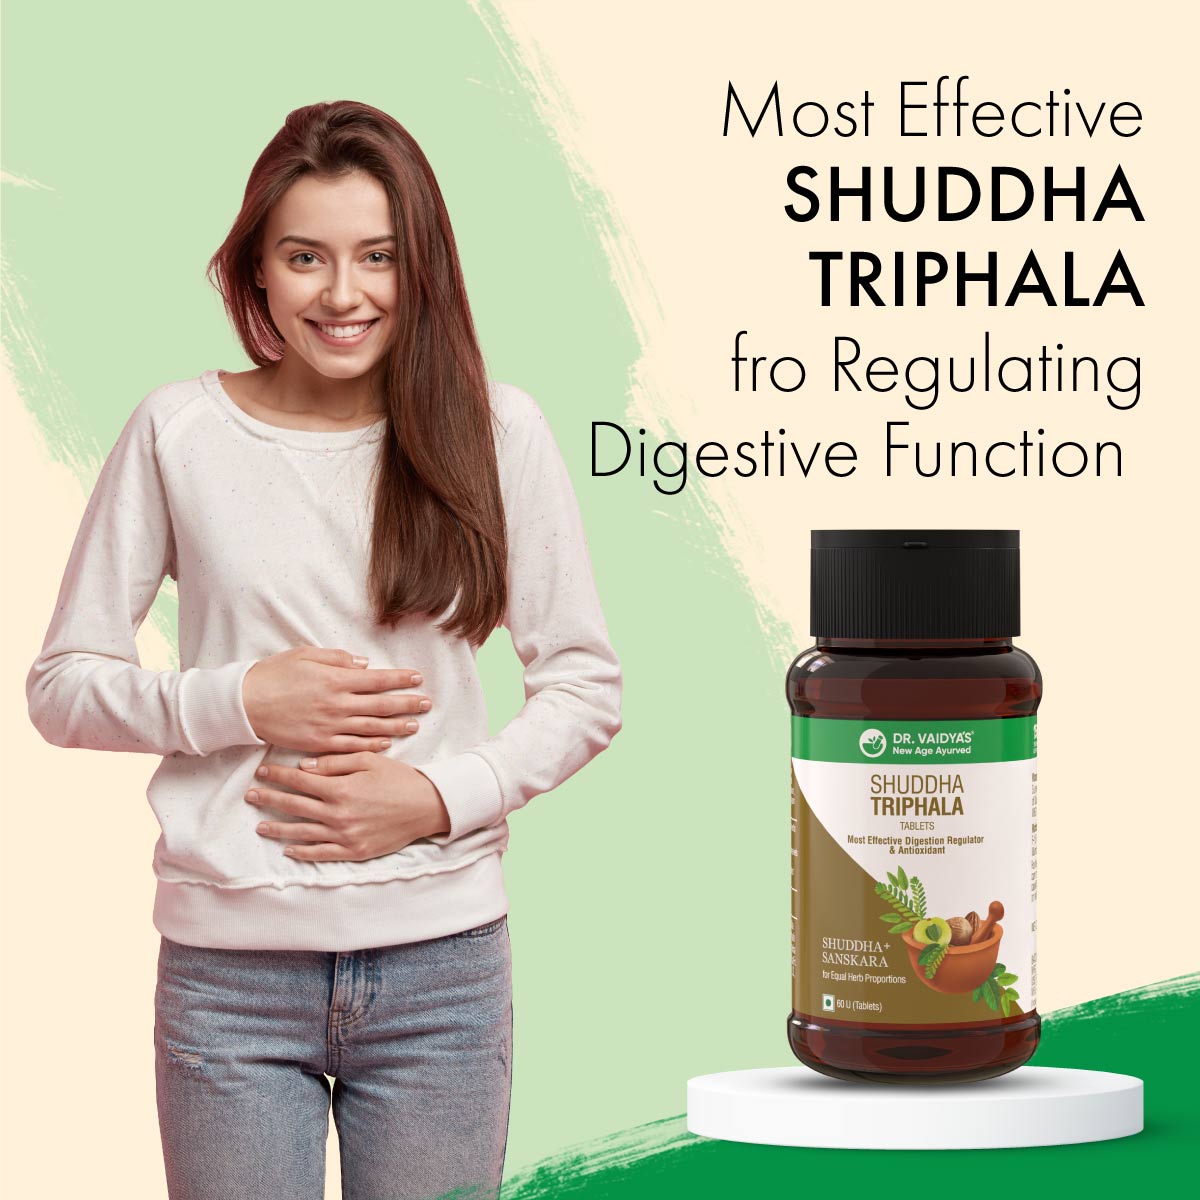 Shuddha Triphala: Most Effective Digestion Regulator & Antioxidant